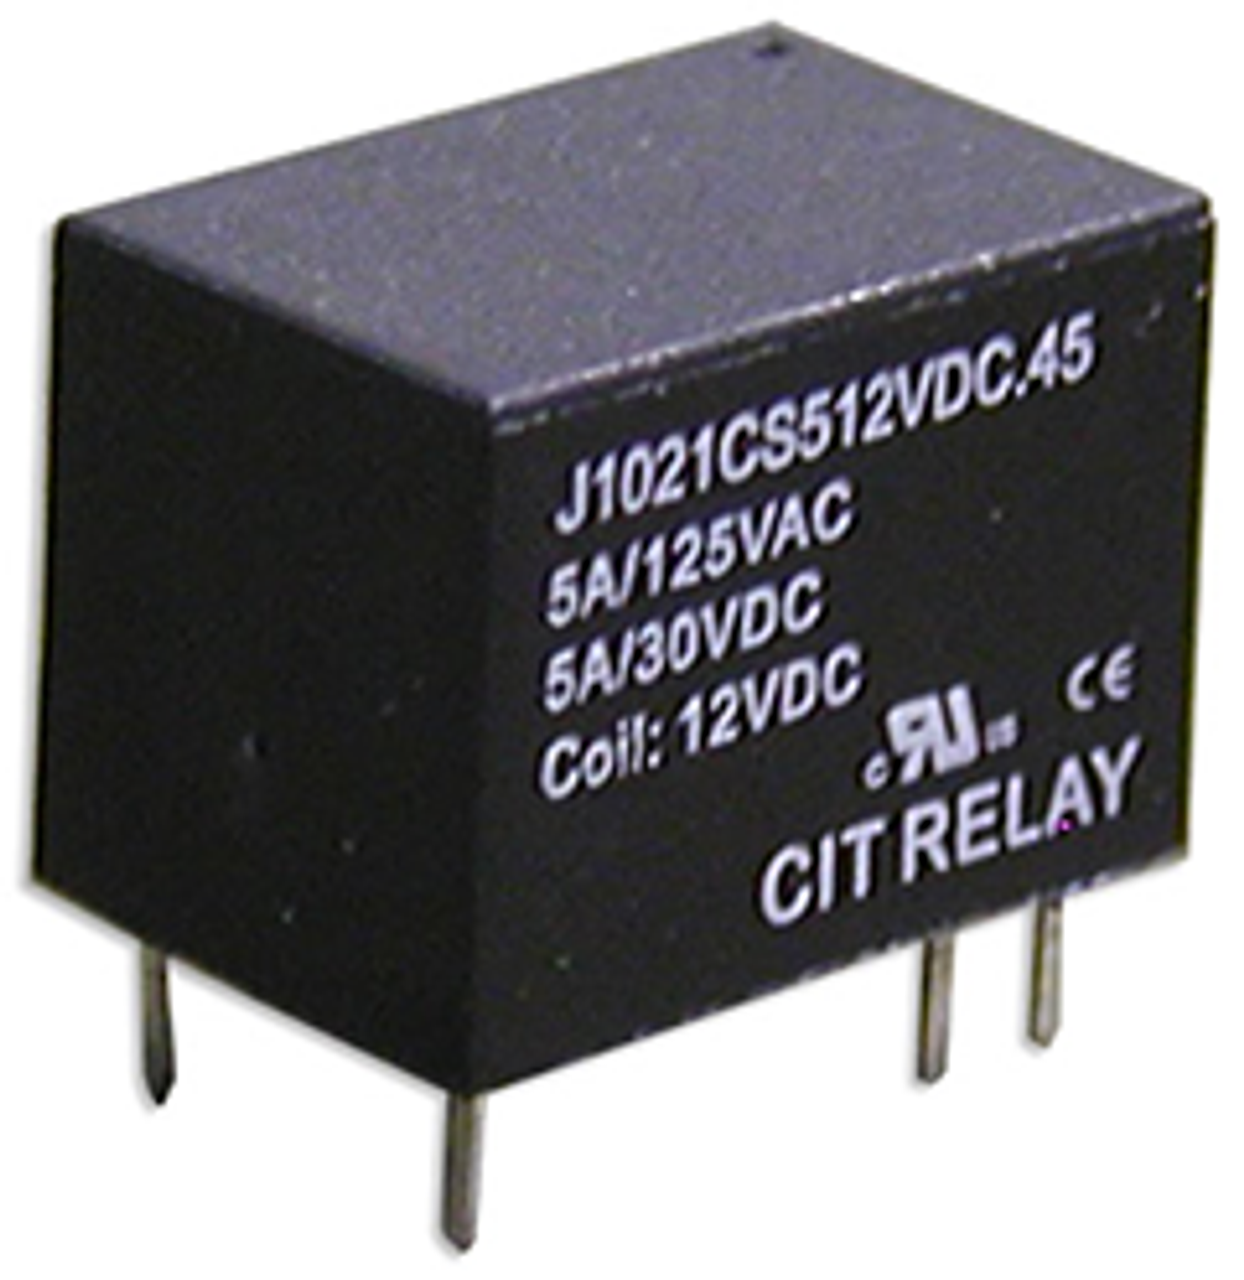 CIT Relay and Switch J1021CS59VDC.45 Power Relays